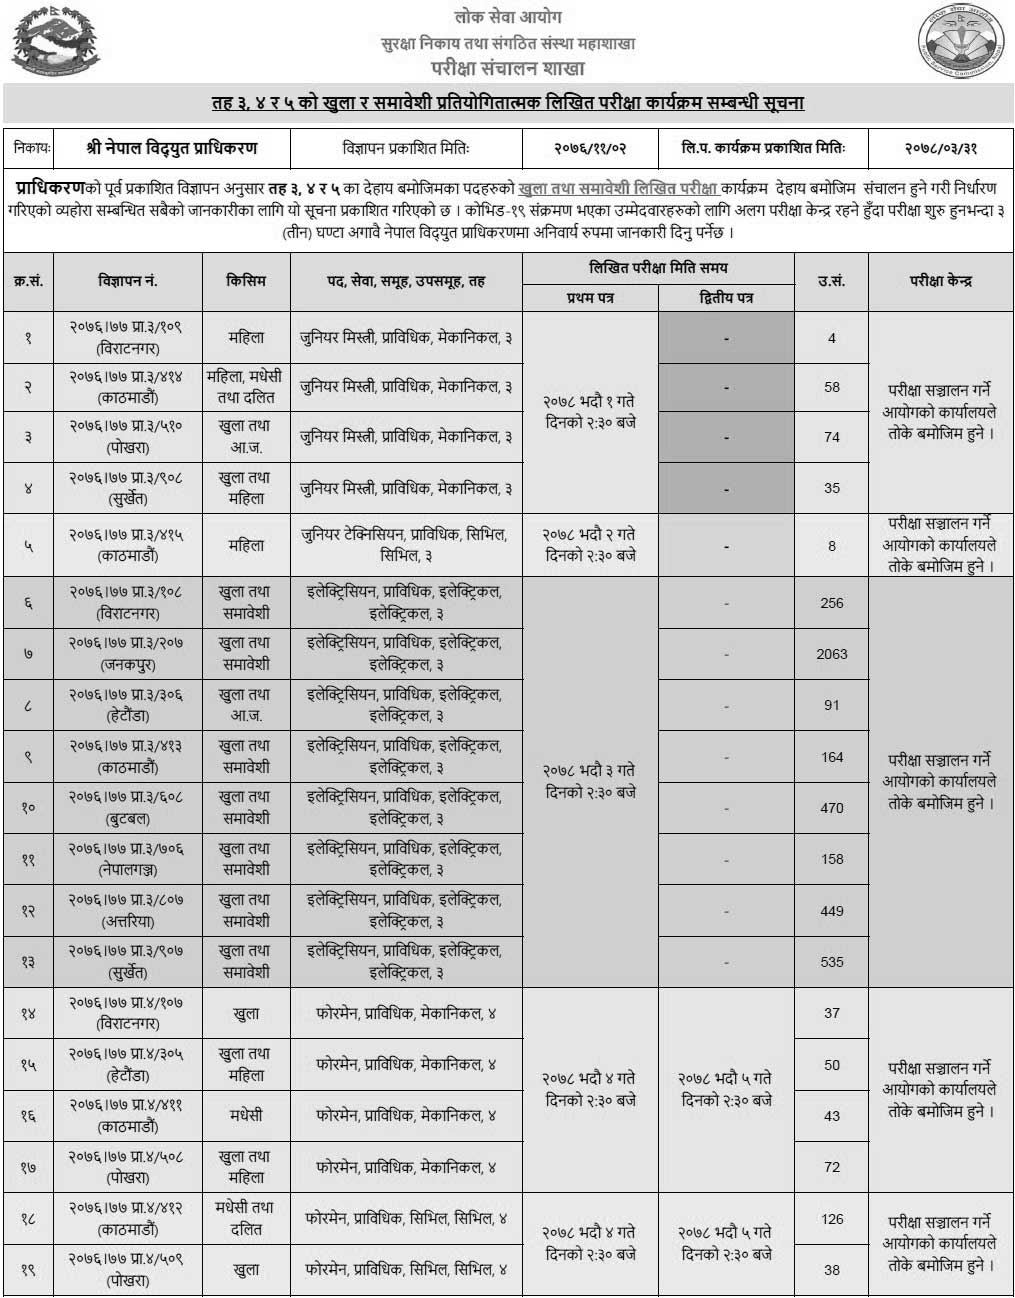 Nepal Electricity Authority (NEA) Written Exam Schedule 2078